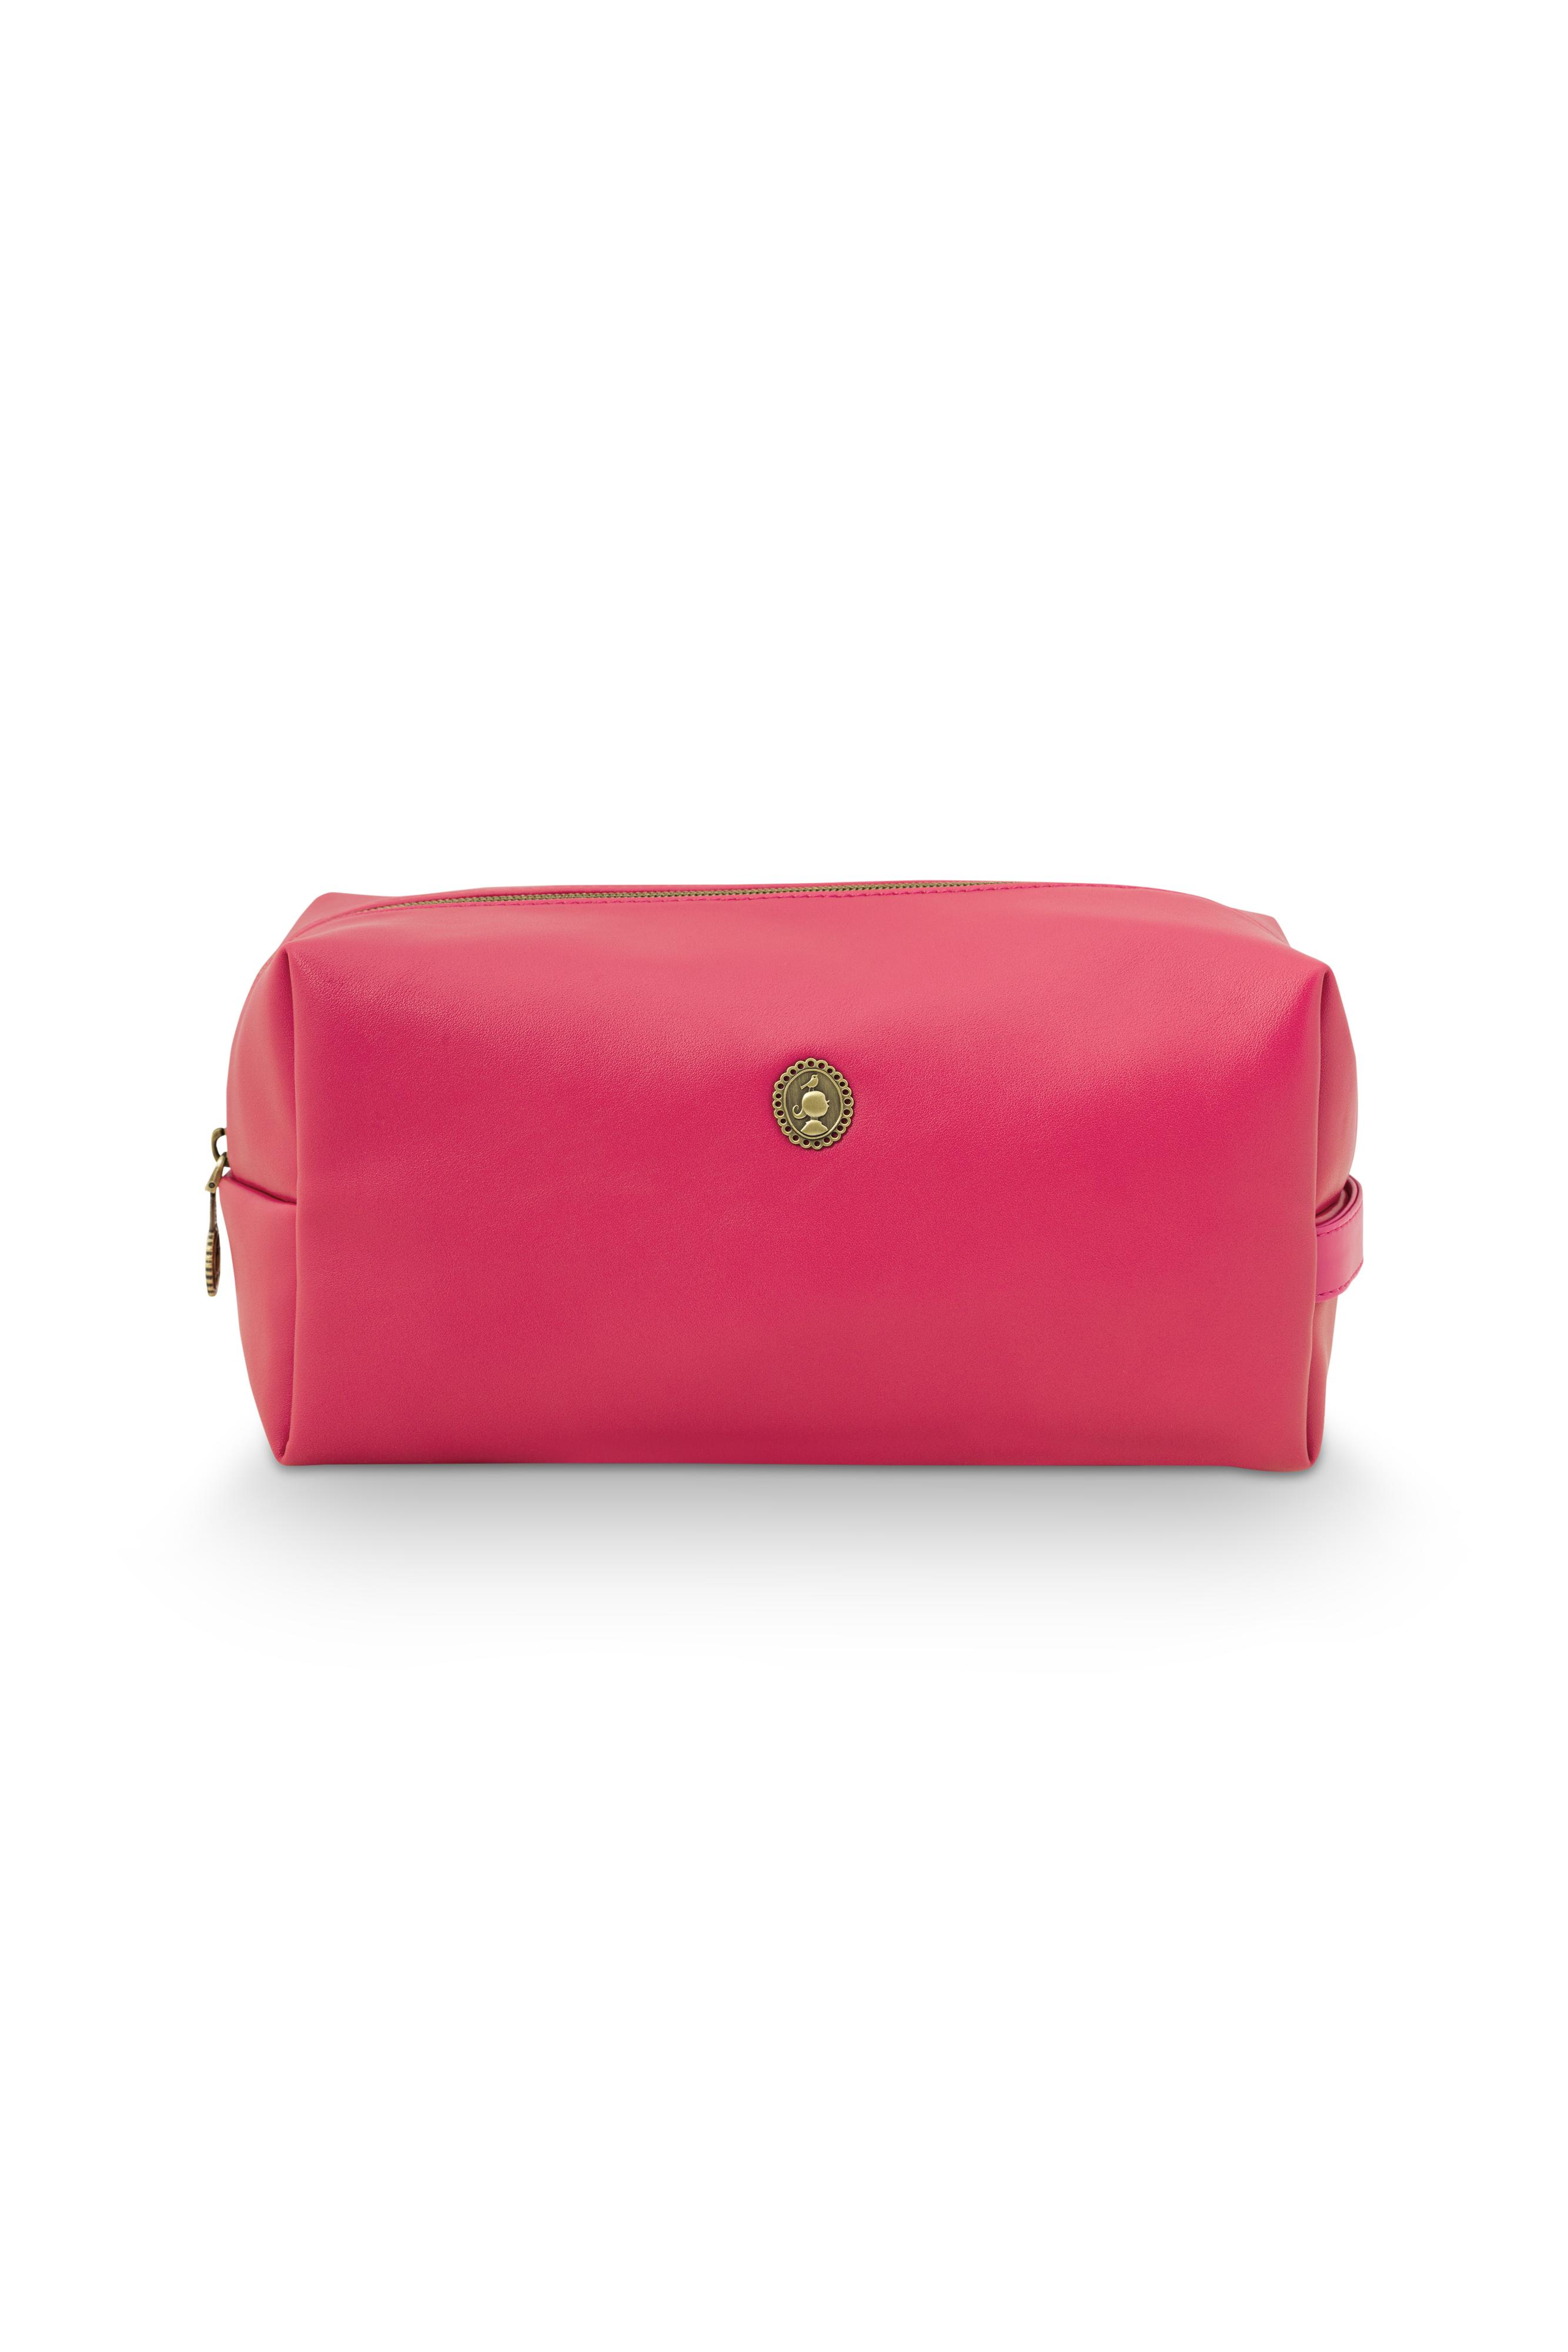 Coco Cosmetic Bag Medium Pink 21.5x10x10.5cm Gift